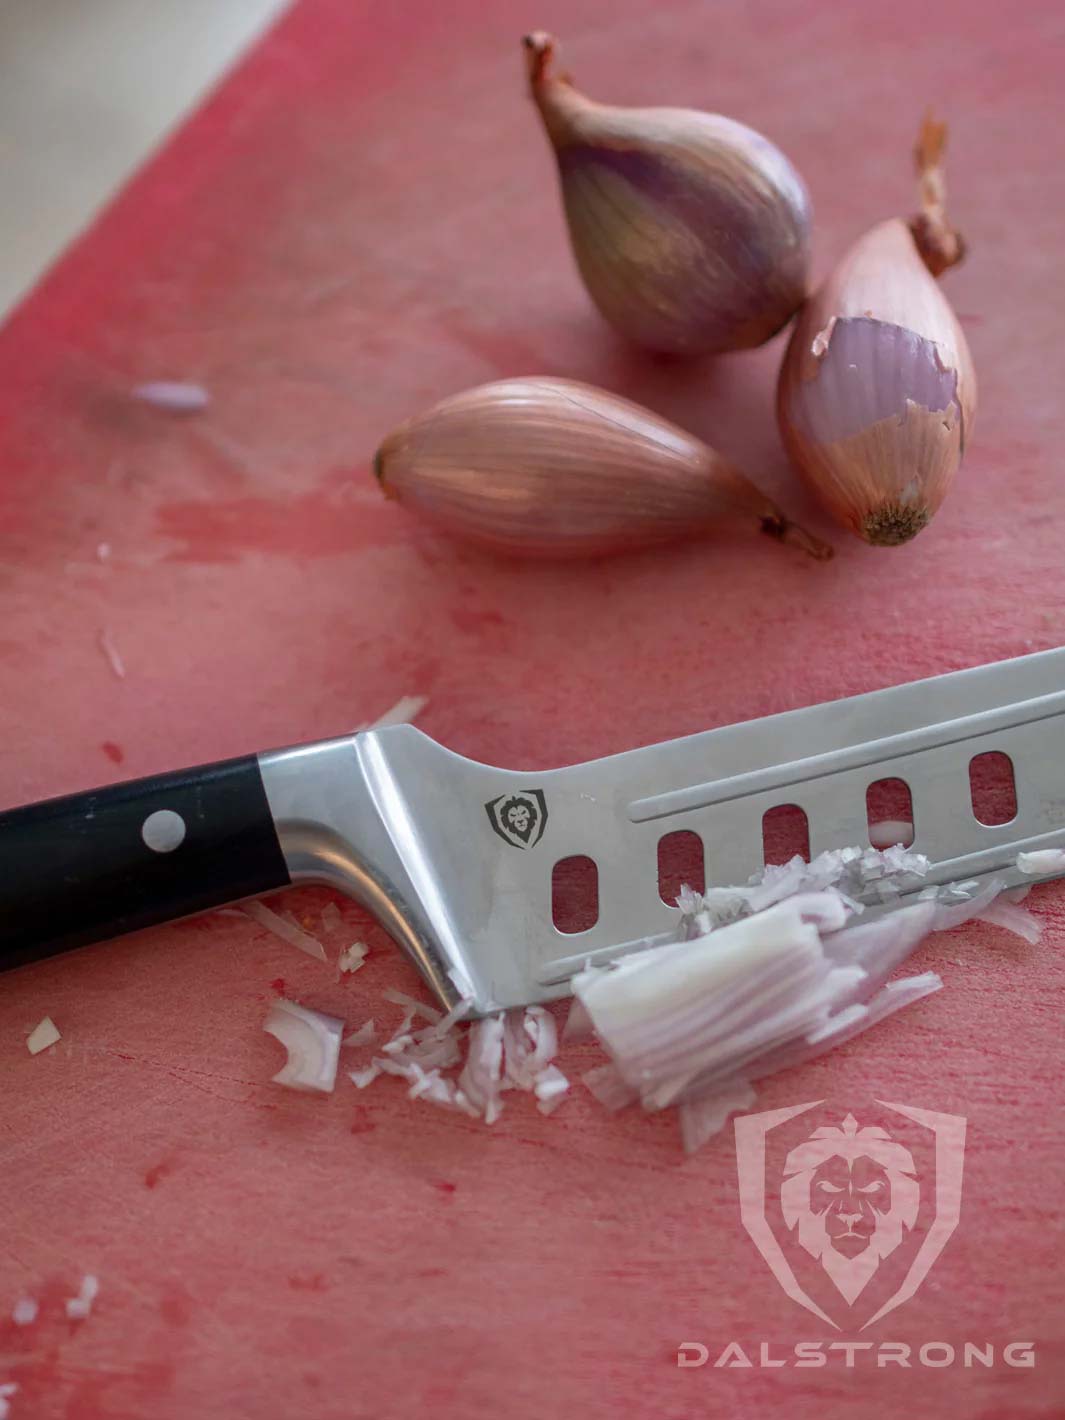 Nakiri Asian Vegetable Knife 6" | Offset Blade | Gladiator Series | NSF Certified | Dalstrong ©